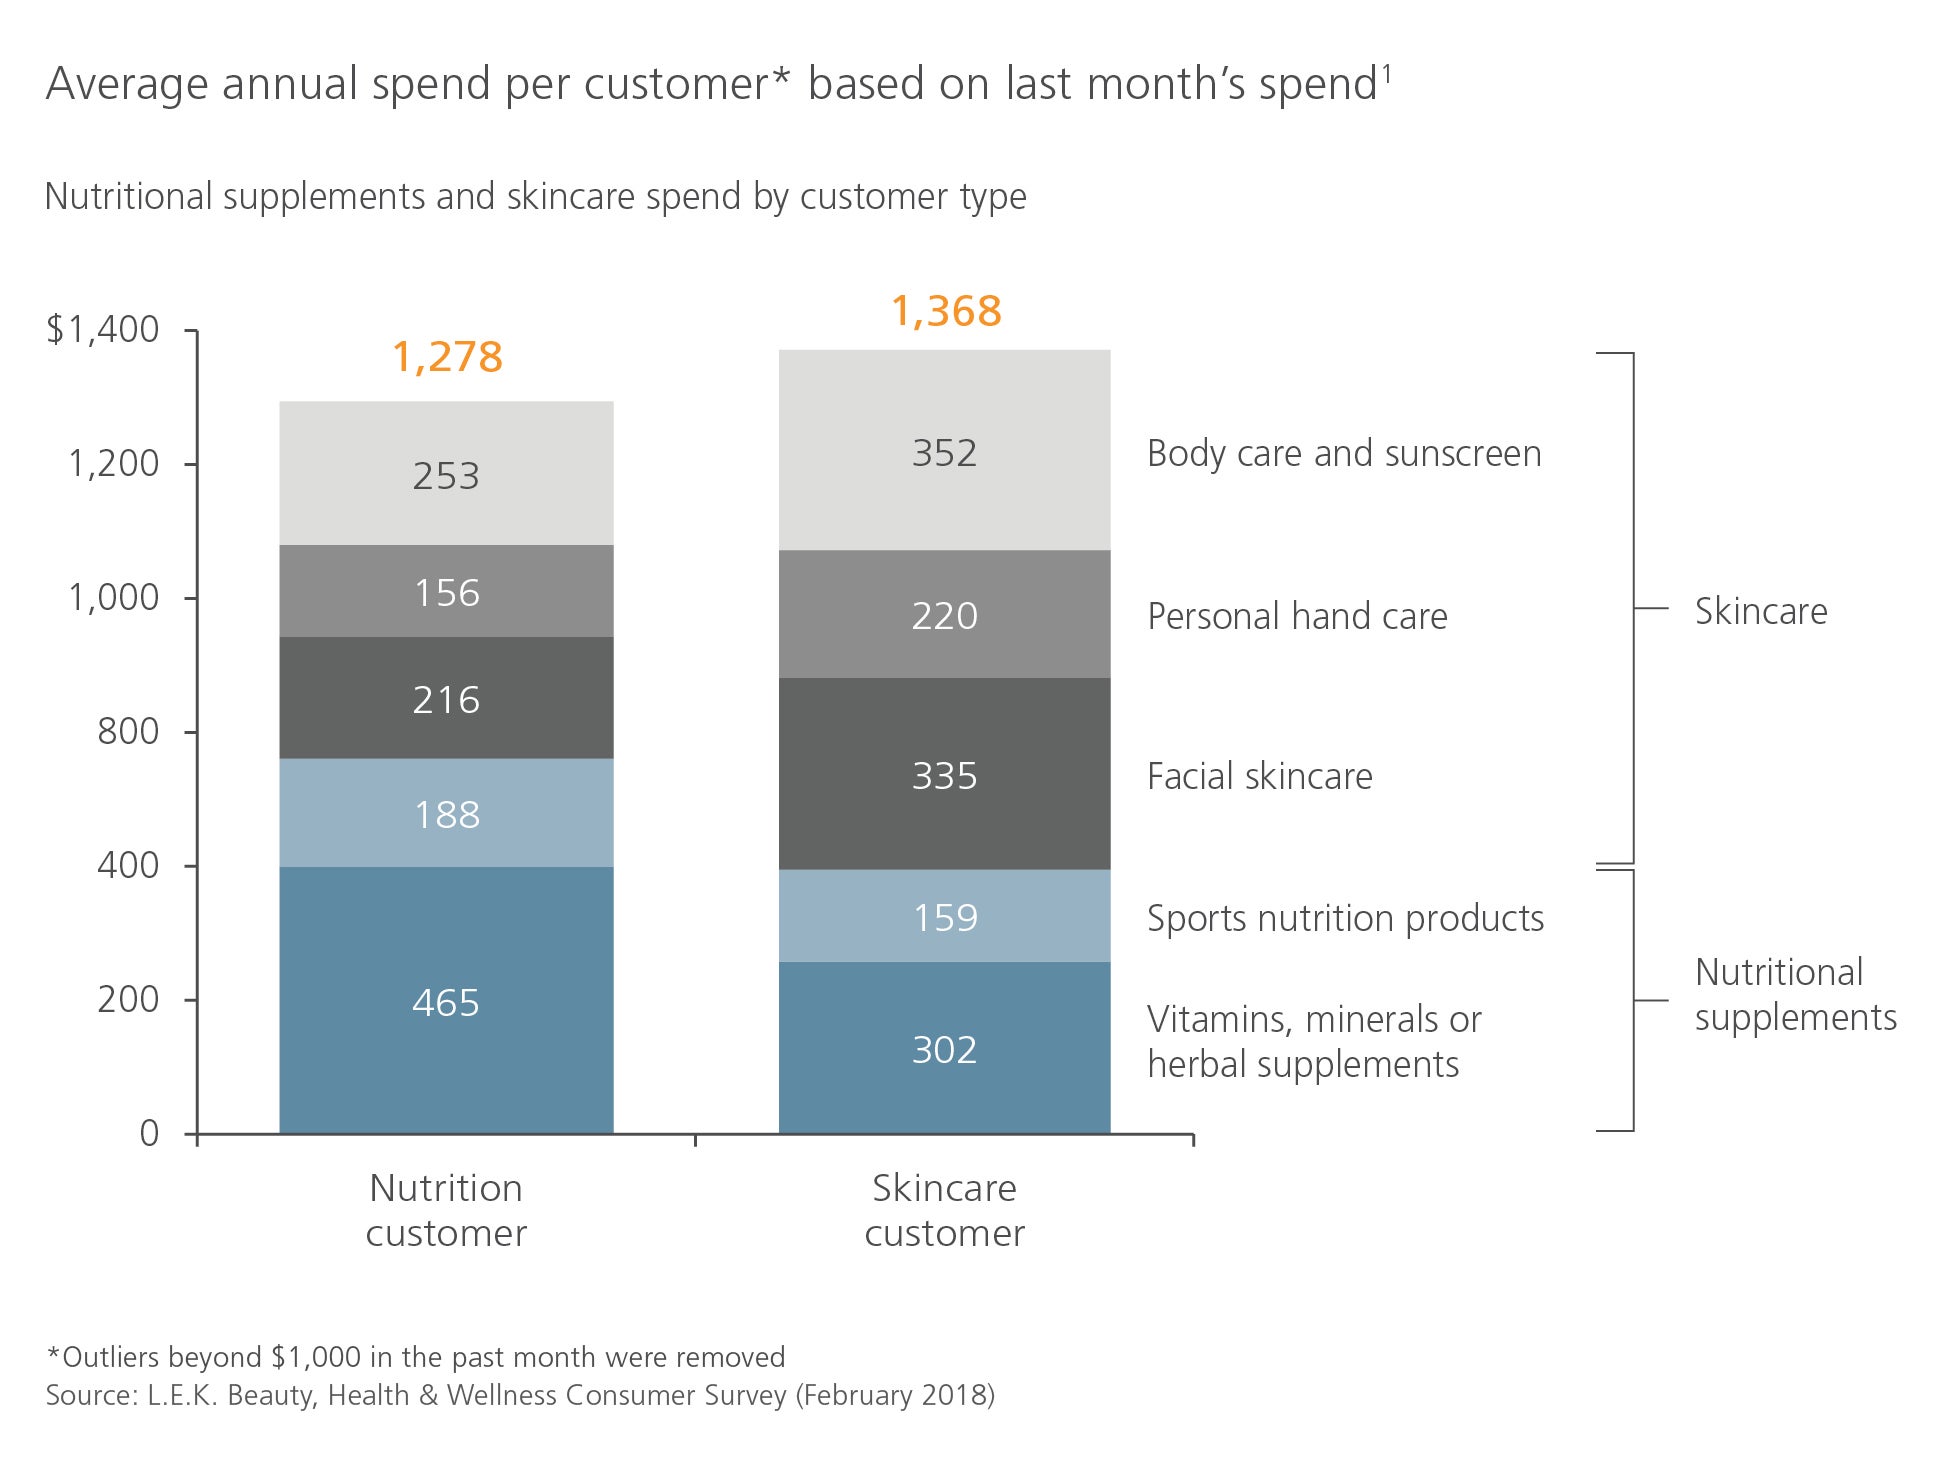 H&W average annual spend per customer